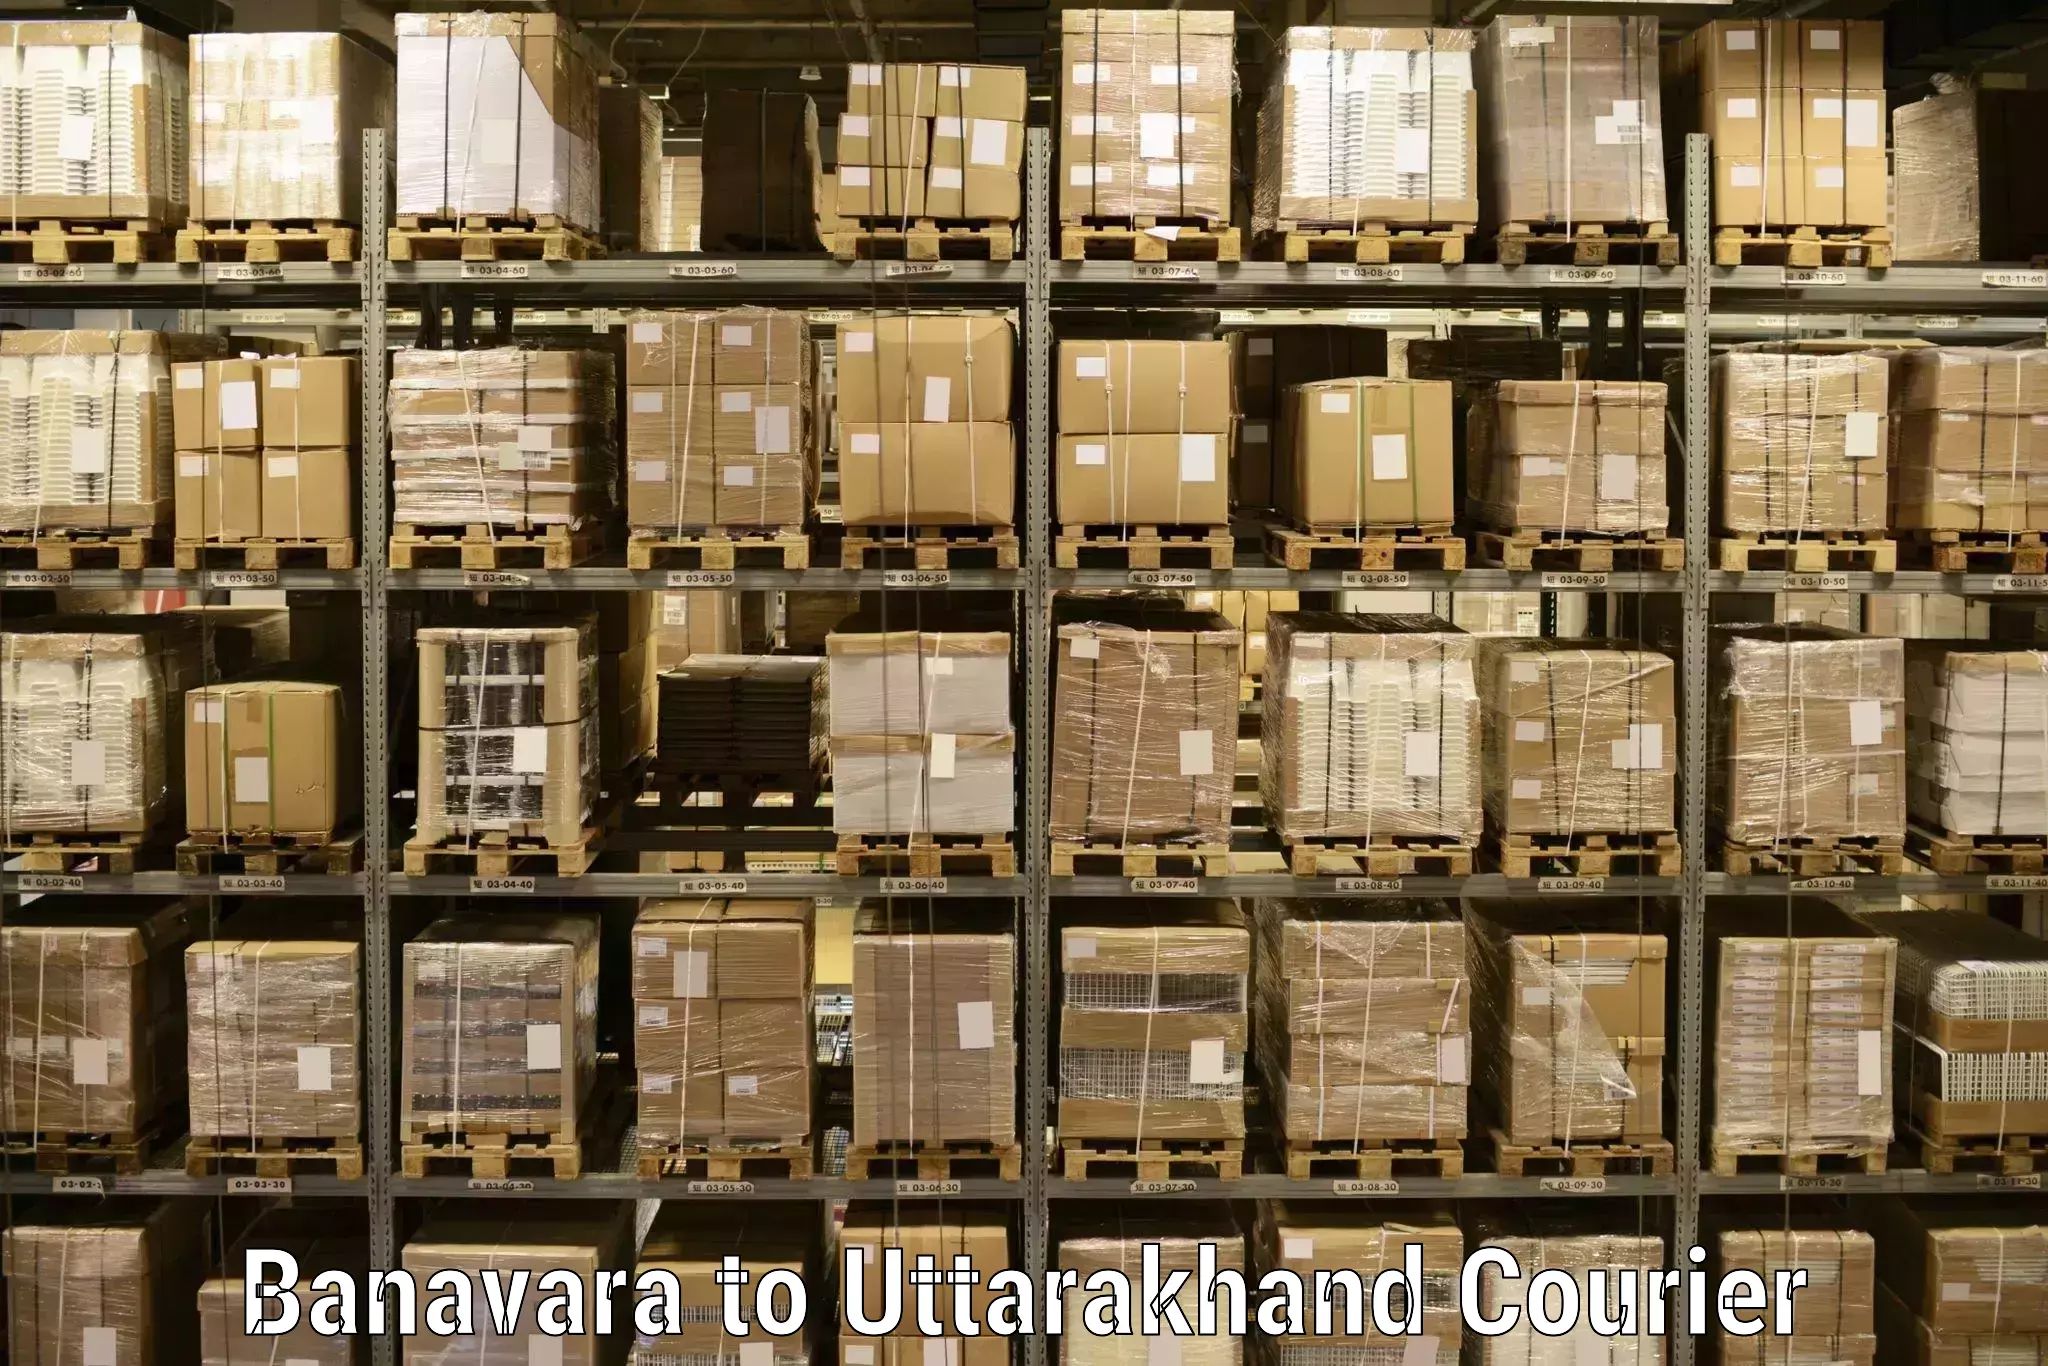 Express mail service in Banavara to Dehradun